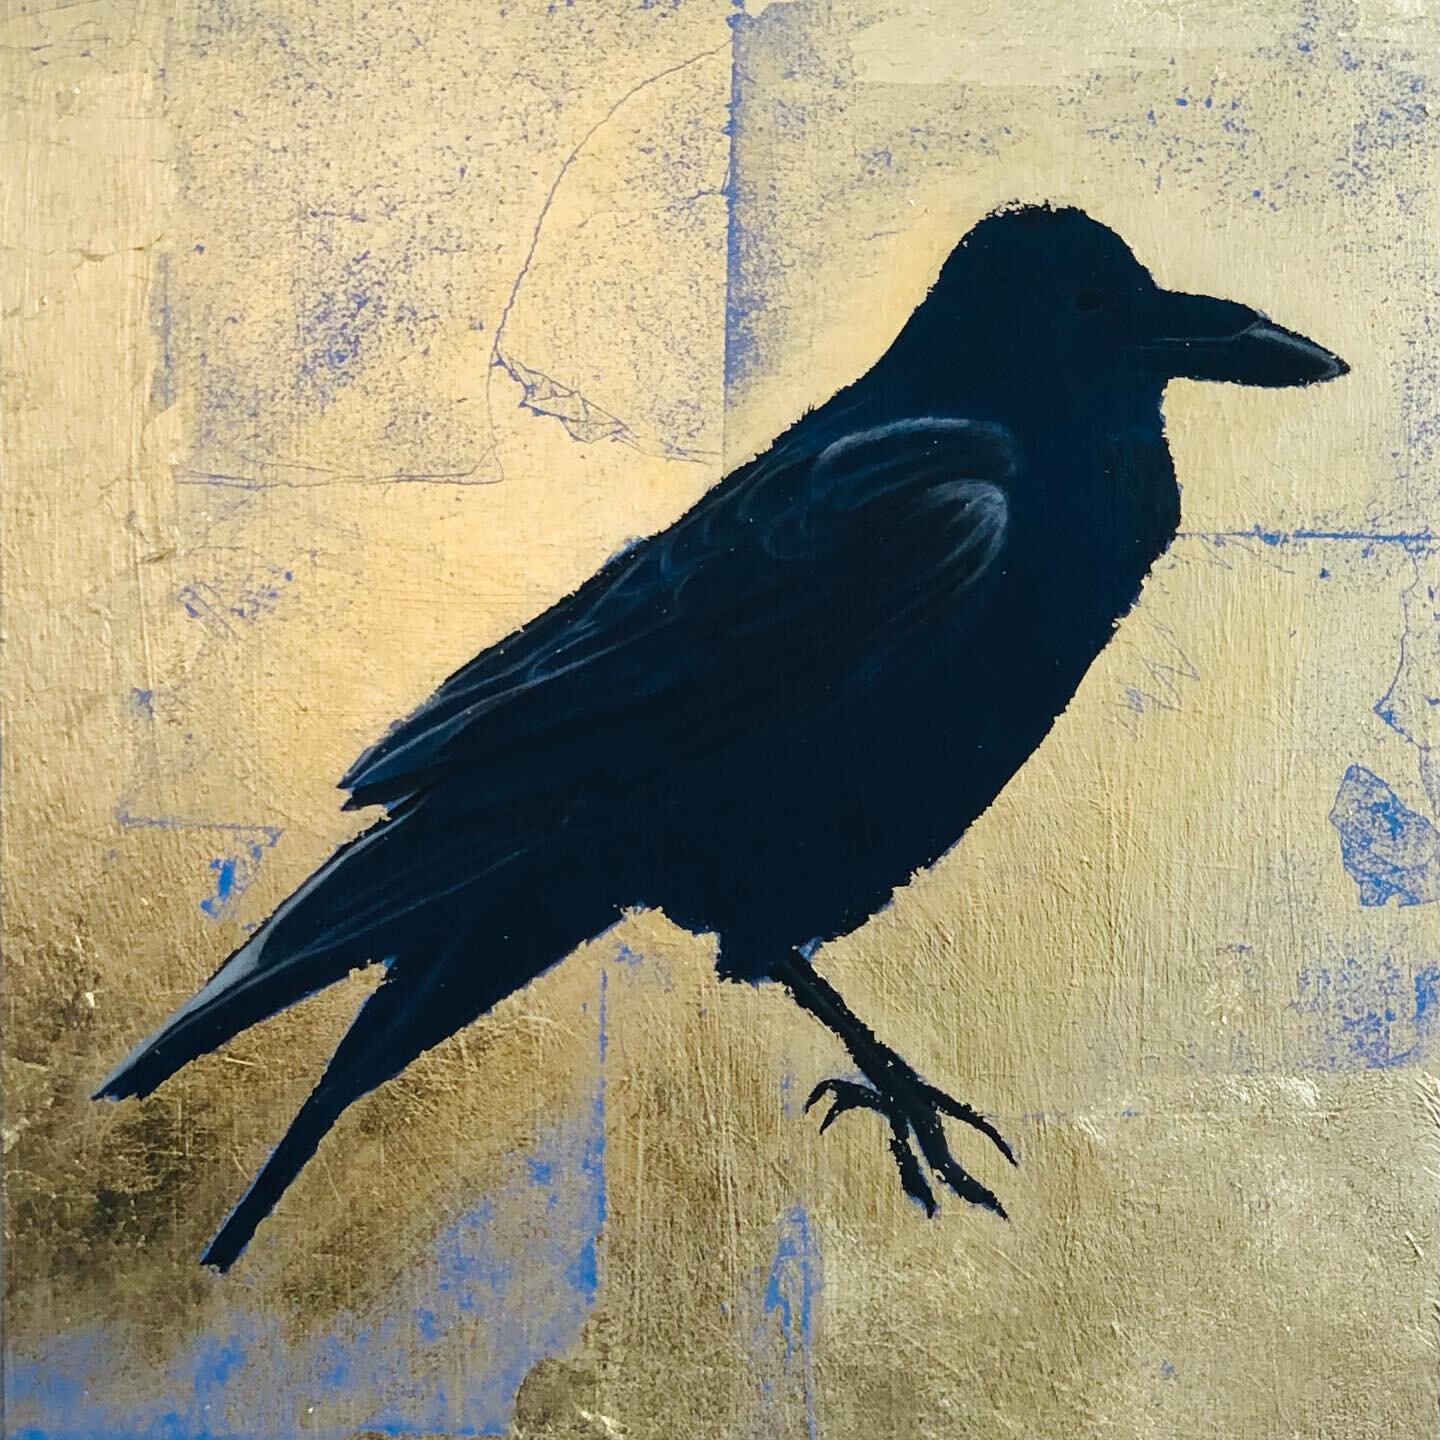 Crow silhouettes on gold 

#corvids #crow #crows
#artoninstagram #art #artexplosionstudios #mixedmedia #mixedmediaart #goldleaf